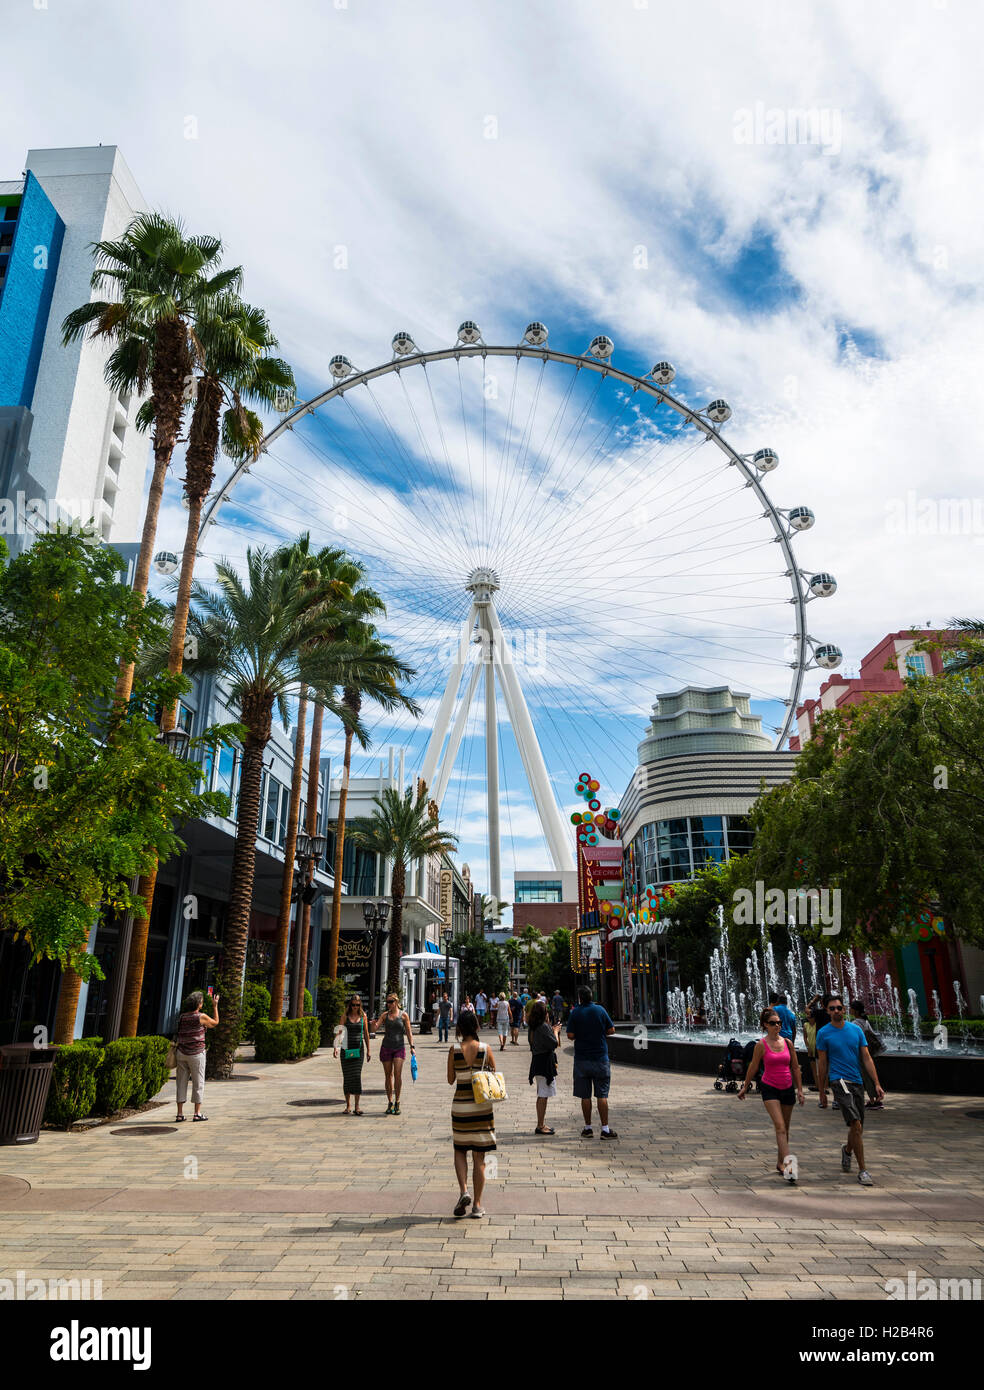 High Roller, Ferris wheel, Las Vegas, Nevada, USA Stock Photo